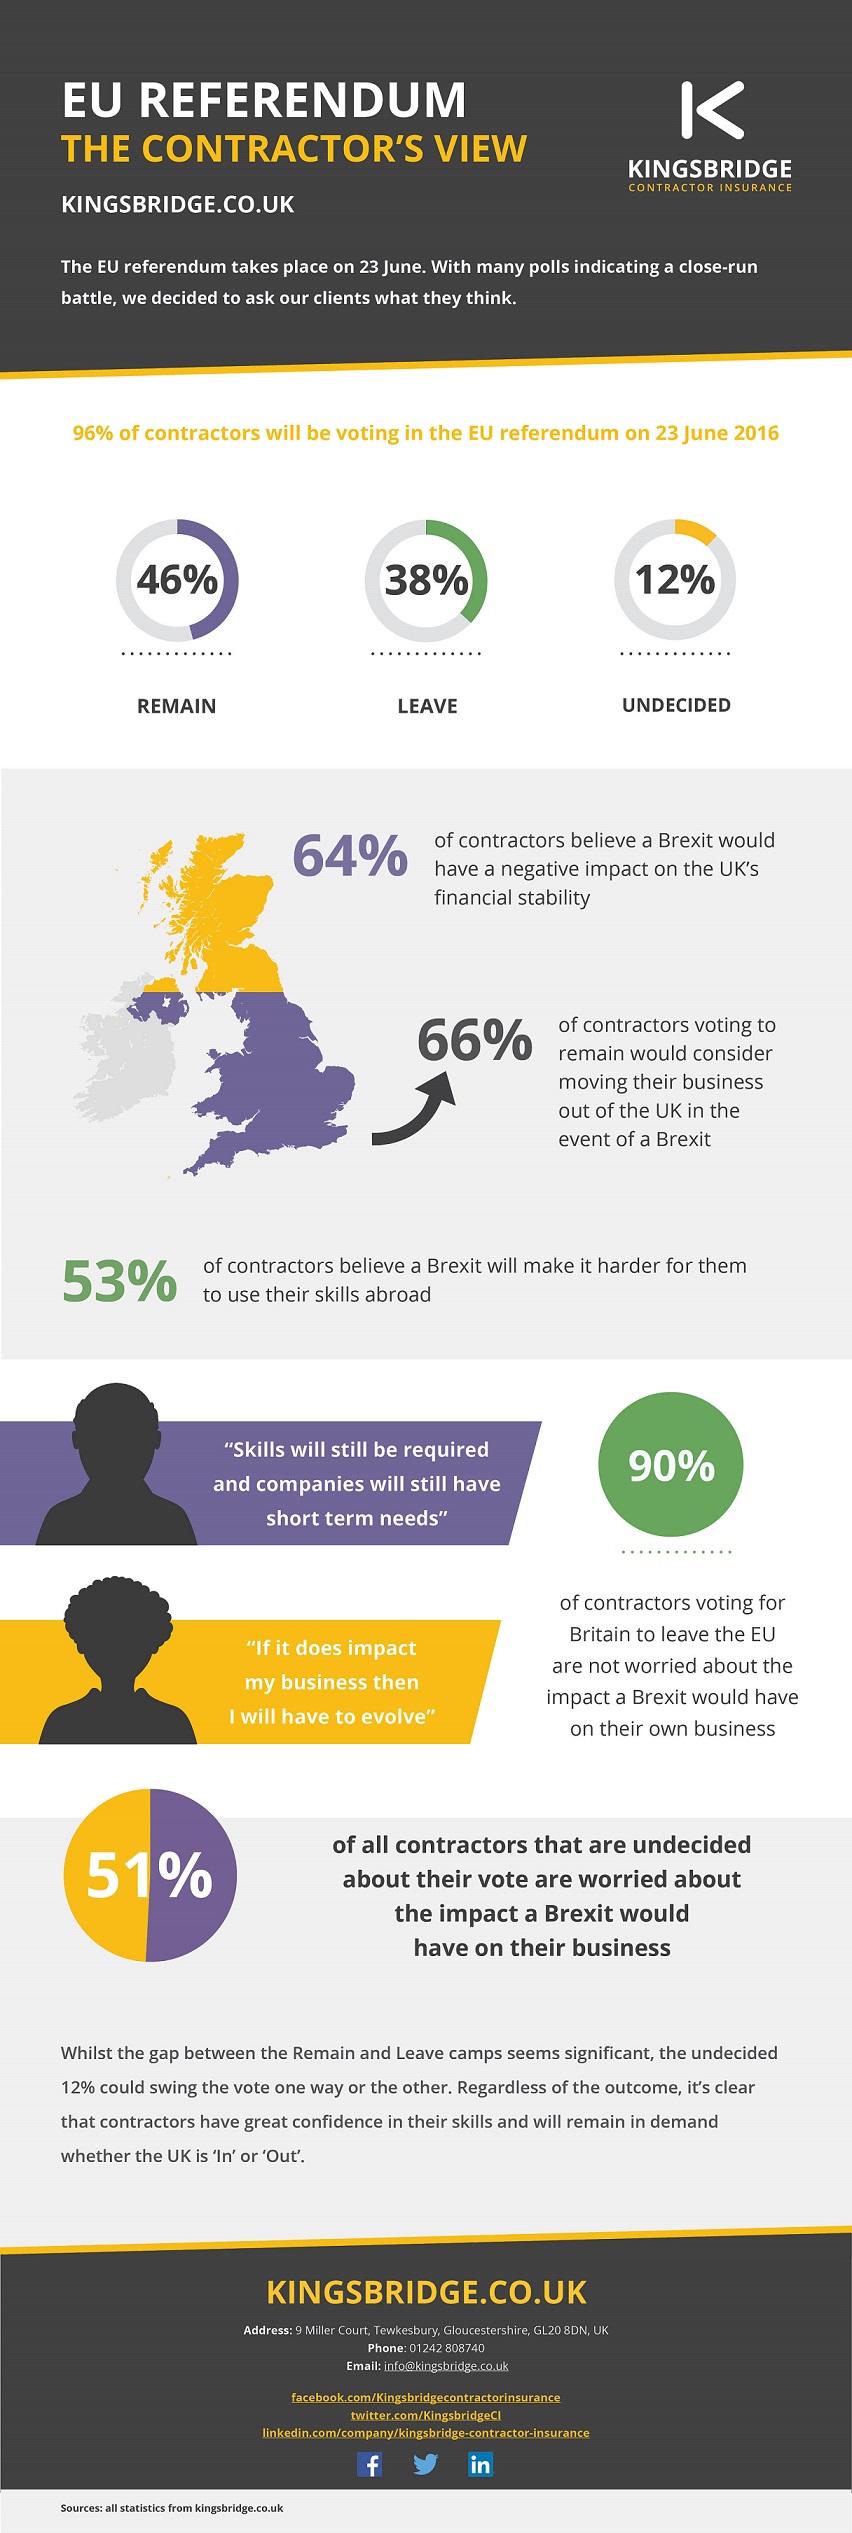 http://www.realwire.com/writeitfiles/Kingsbridge-Referendum-Infographic1.jpg